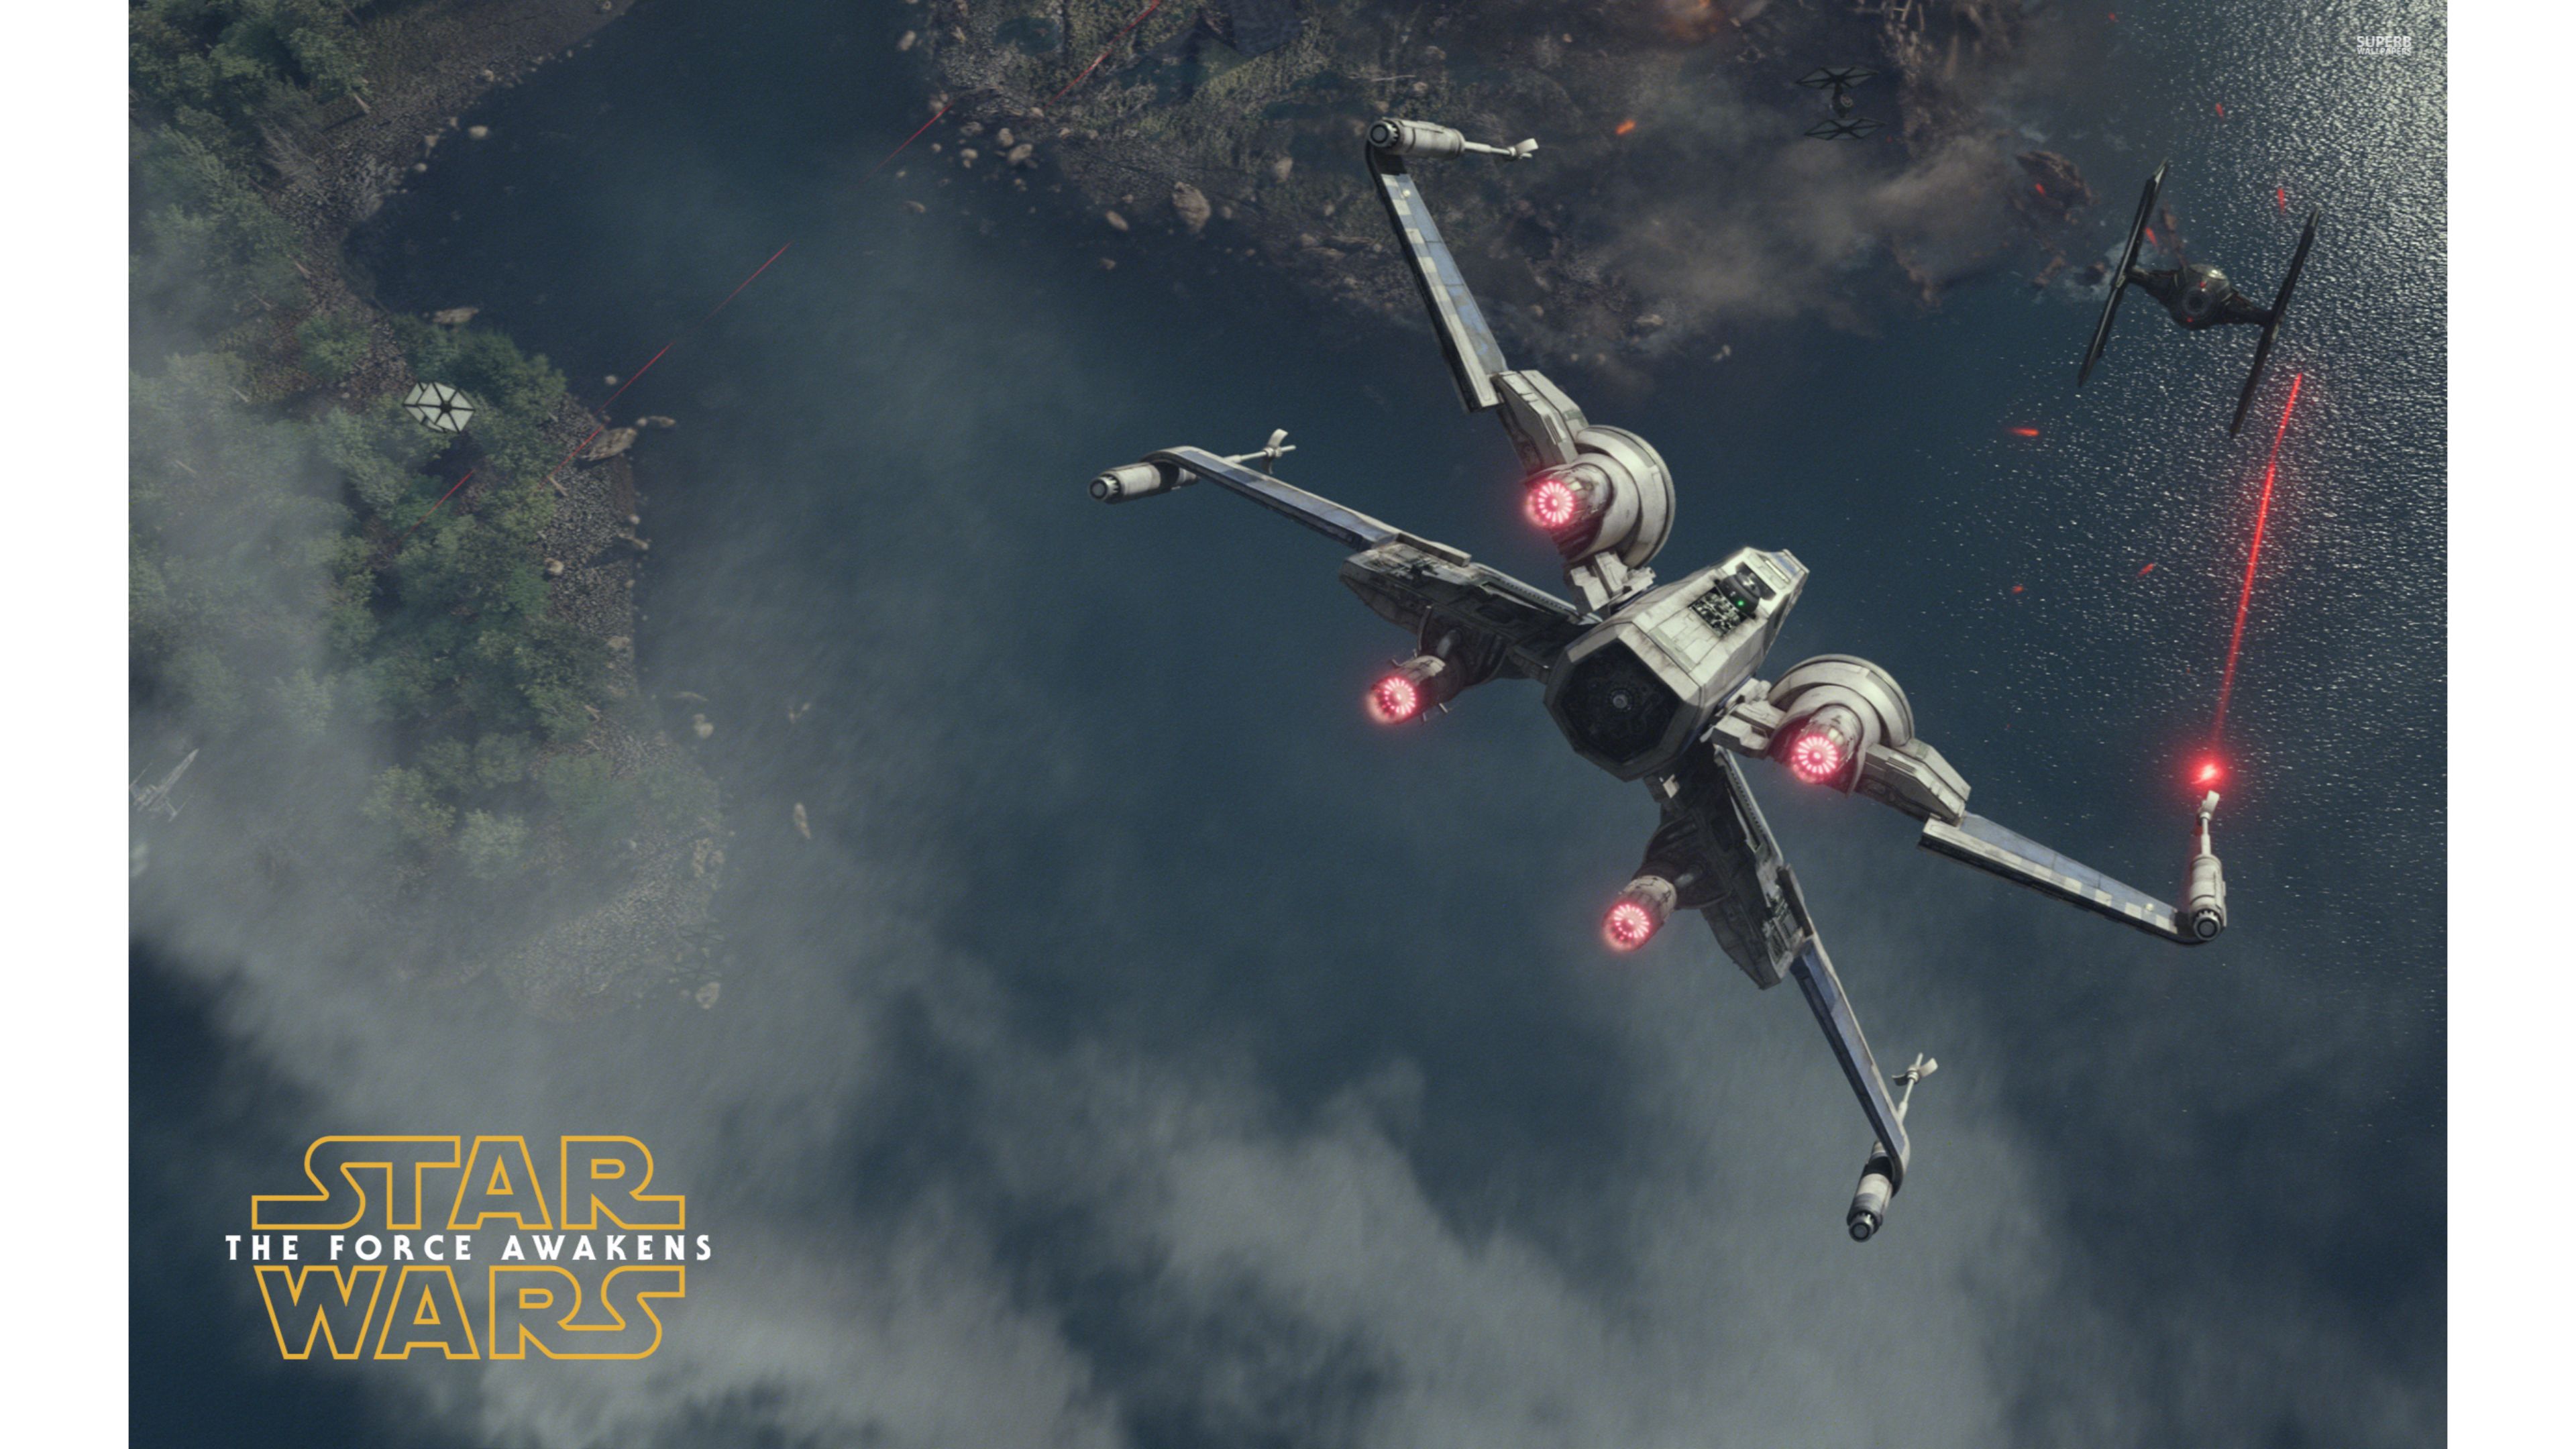 X-Wing Fighter Star Wars The Force Awakens 4K Wallpaper | Free 4K ...